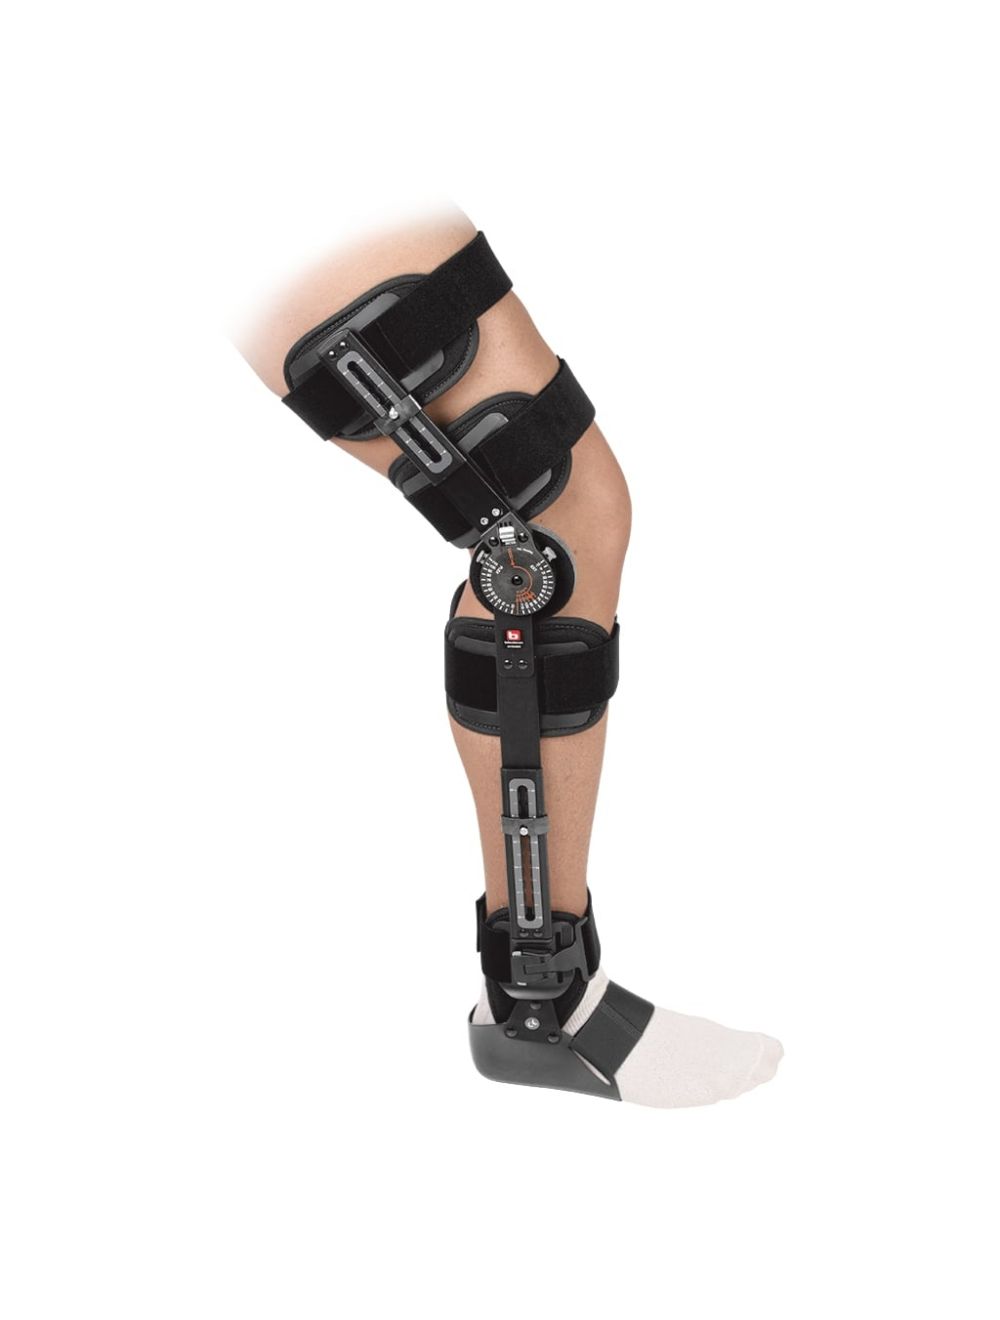 California Medical Supply Company Breg Extender Plus Post-Op Knee Braces  AAA Medical Supply In San Diego